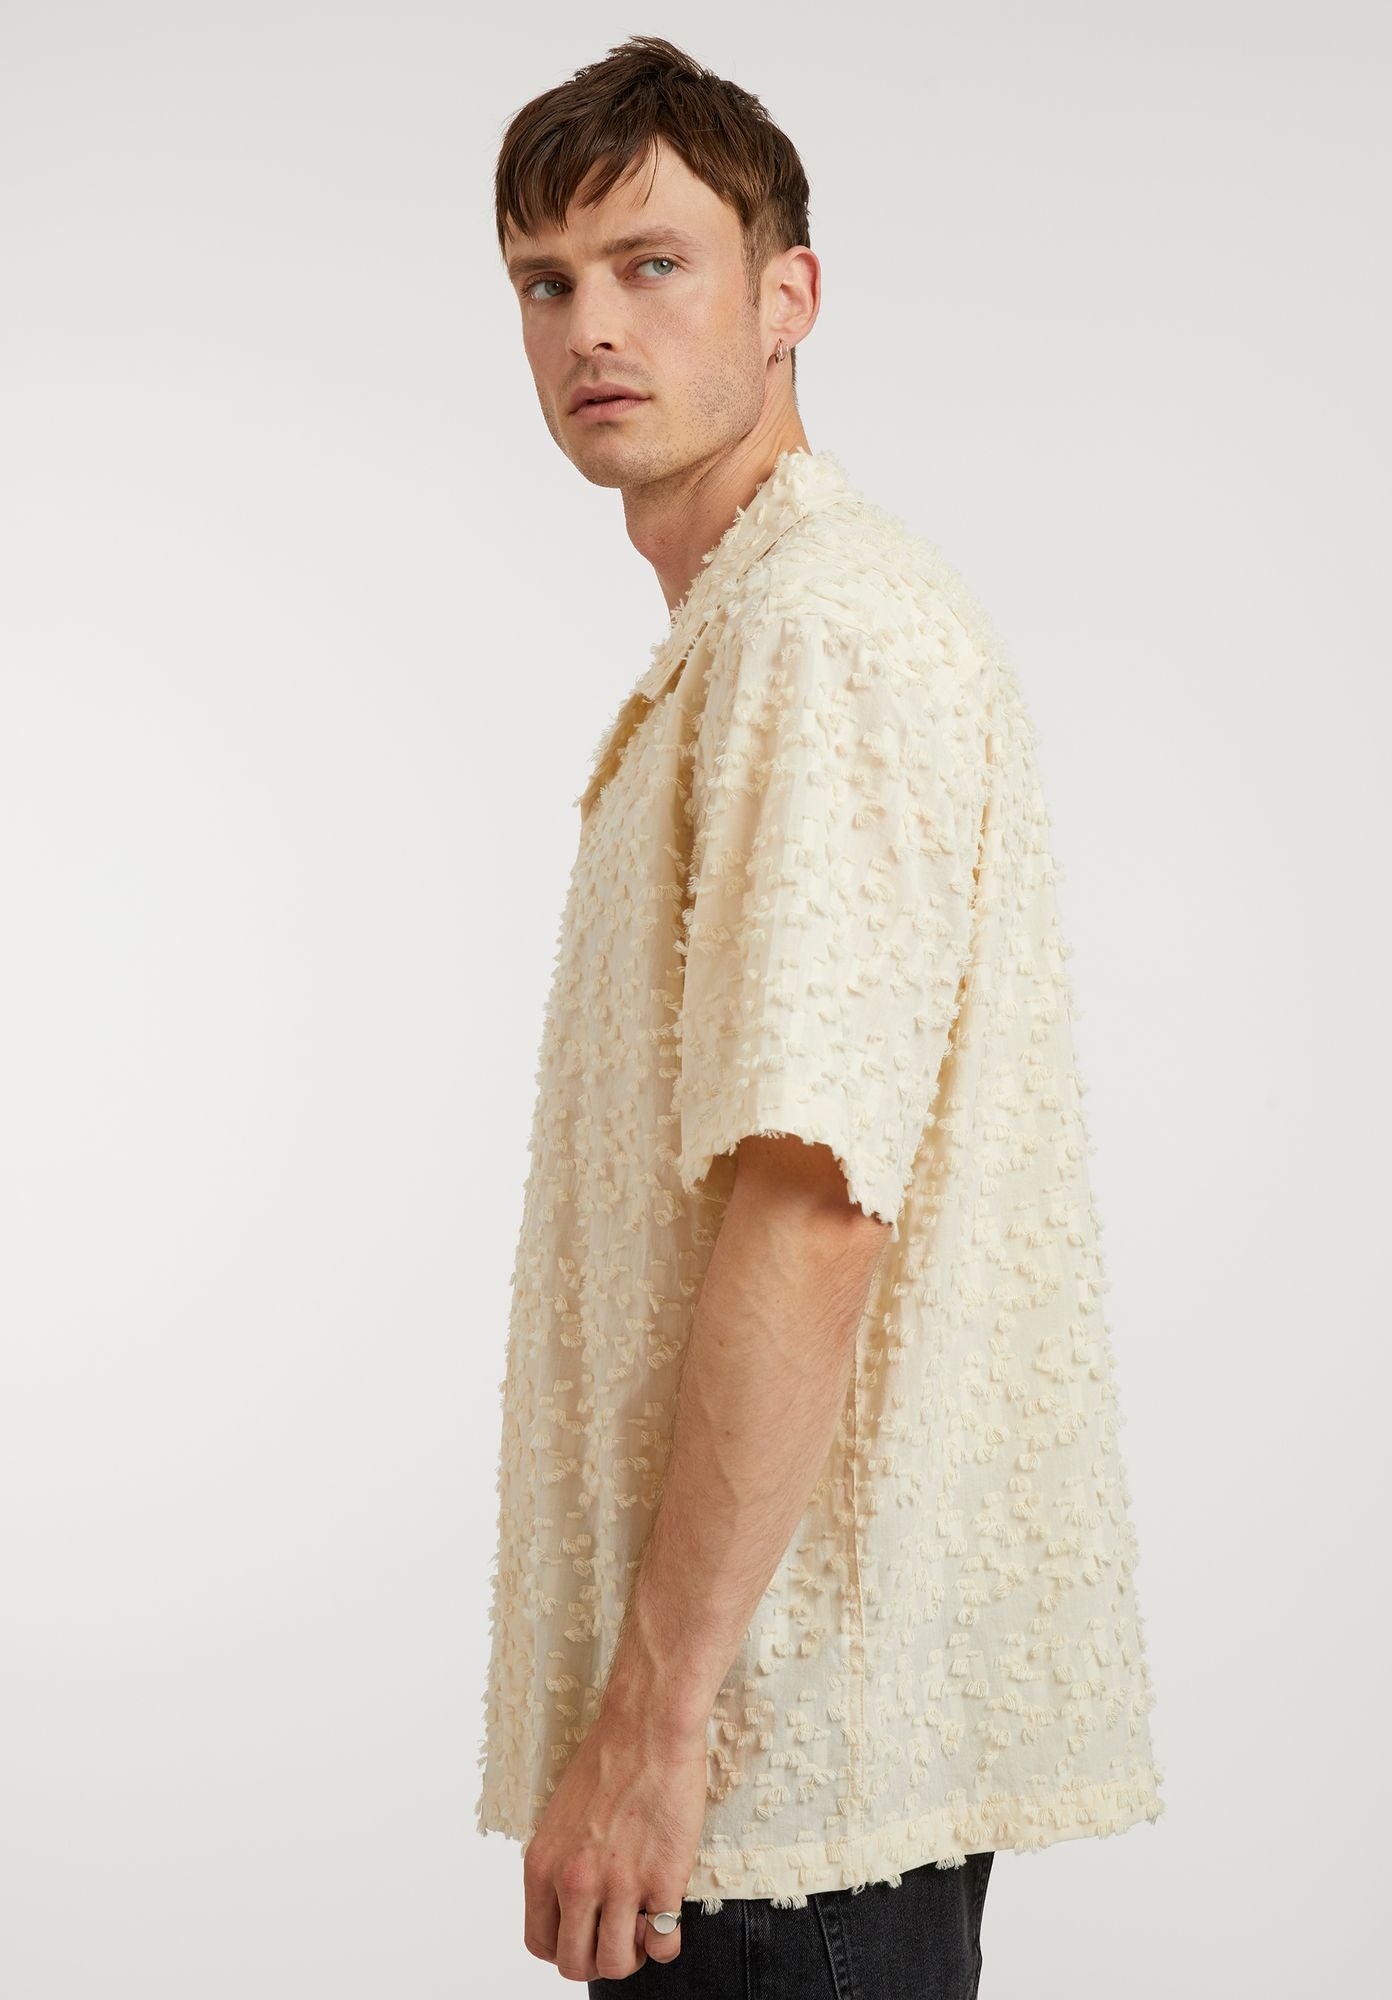 Bowling shirt in cream made of organic cotton by ThokkThokk (S)